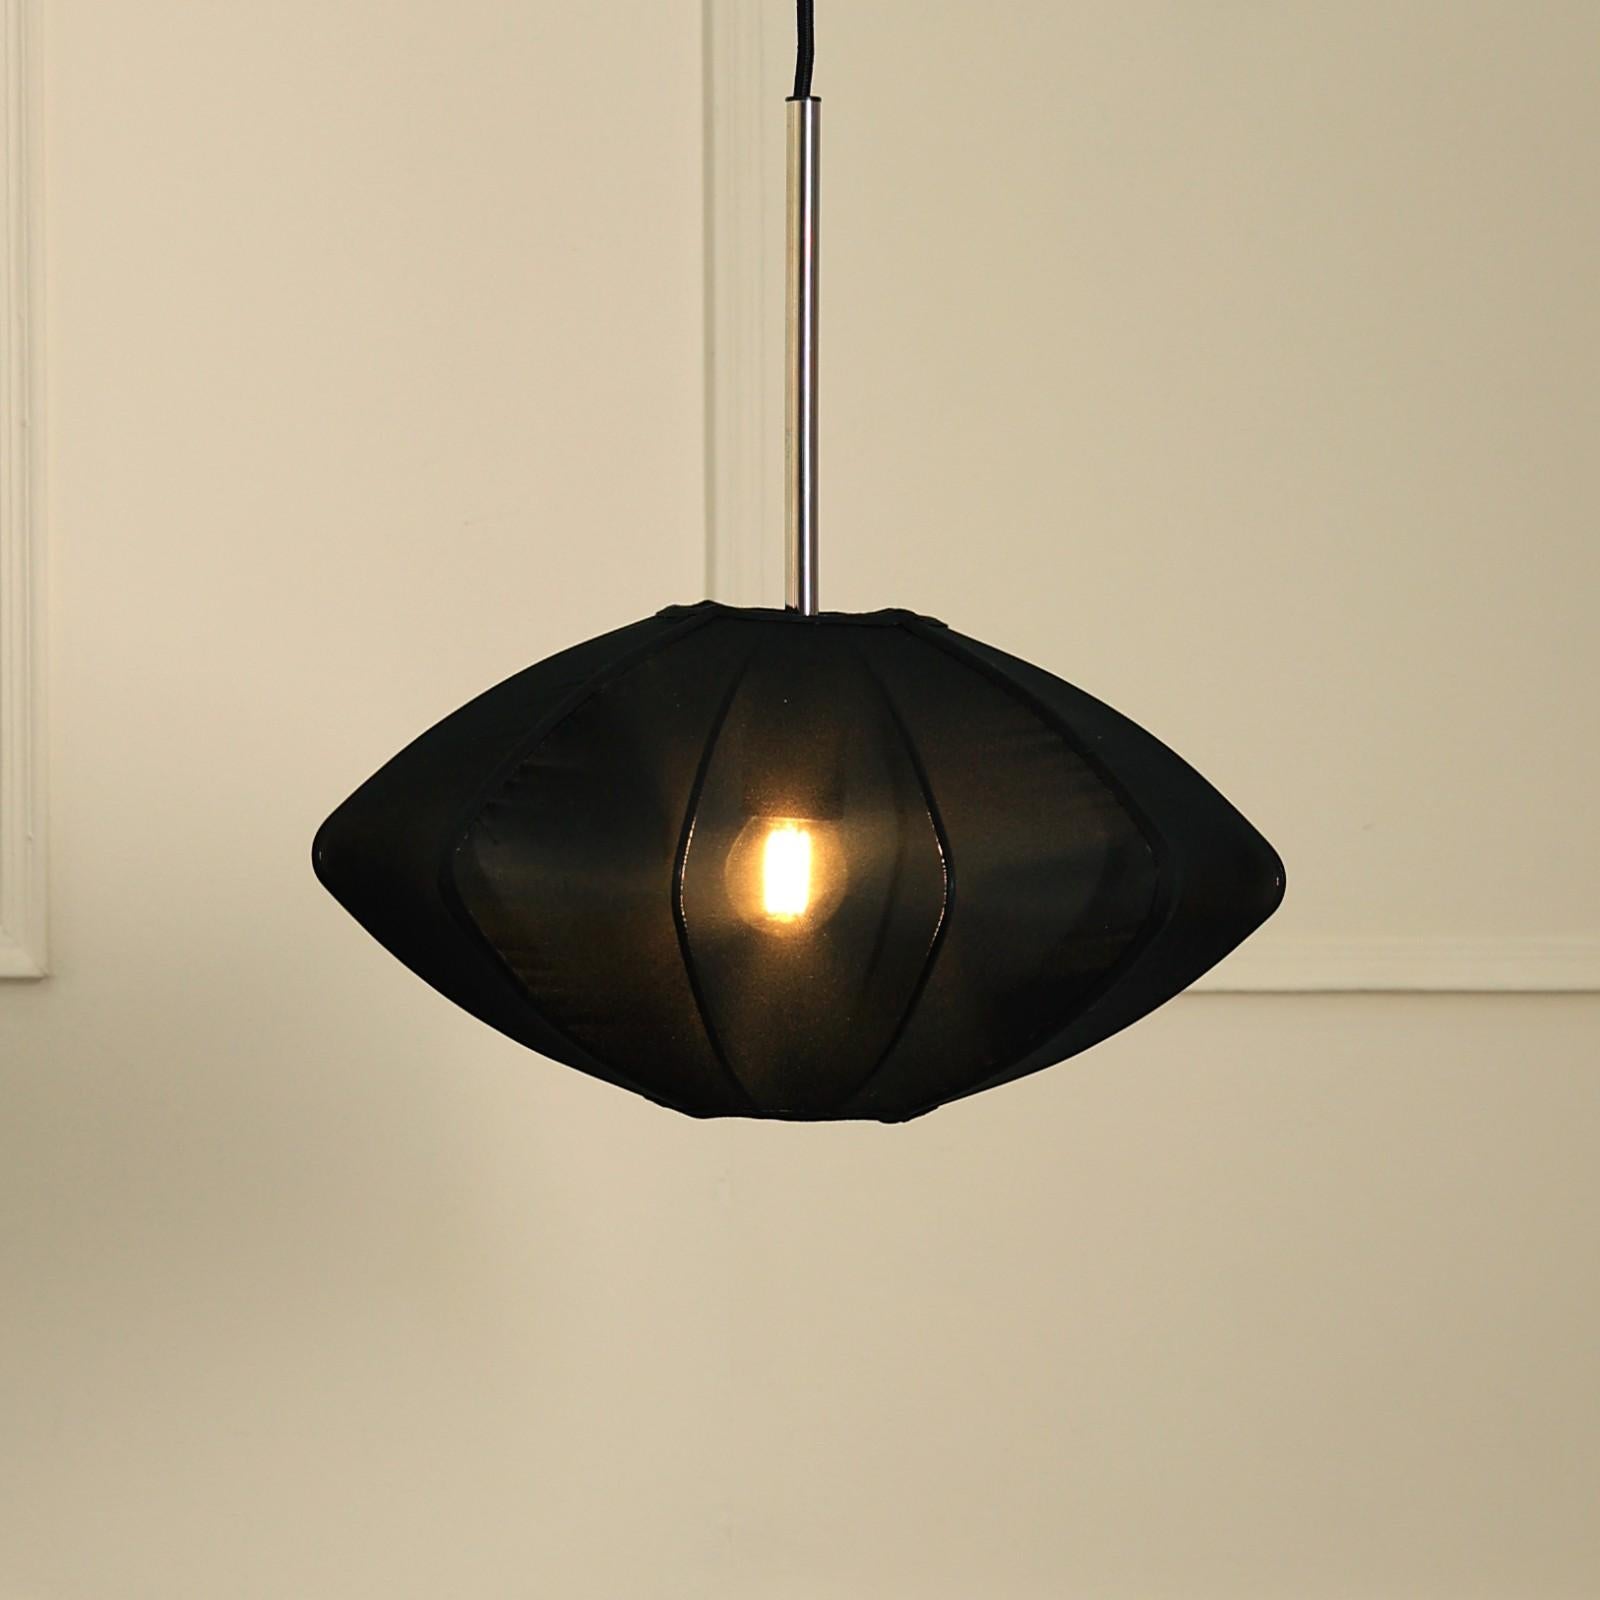 Luxe Collection - Tokyo Lamp  - Premium Chiffon Fabric, Metallic Spacer, Soft Warm Glow, Mood Enhancement Lighting